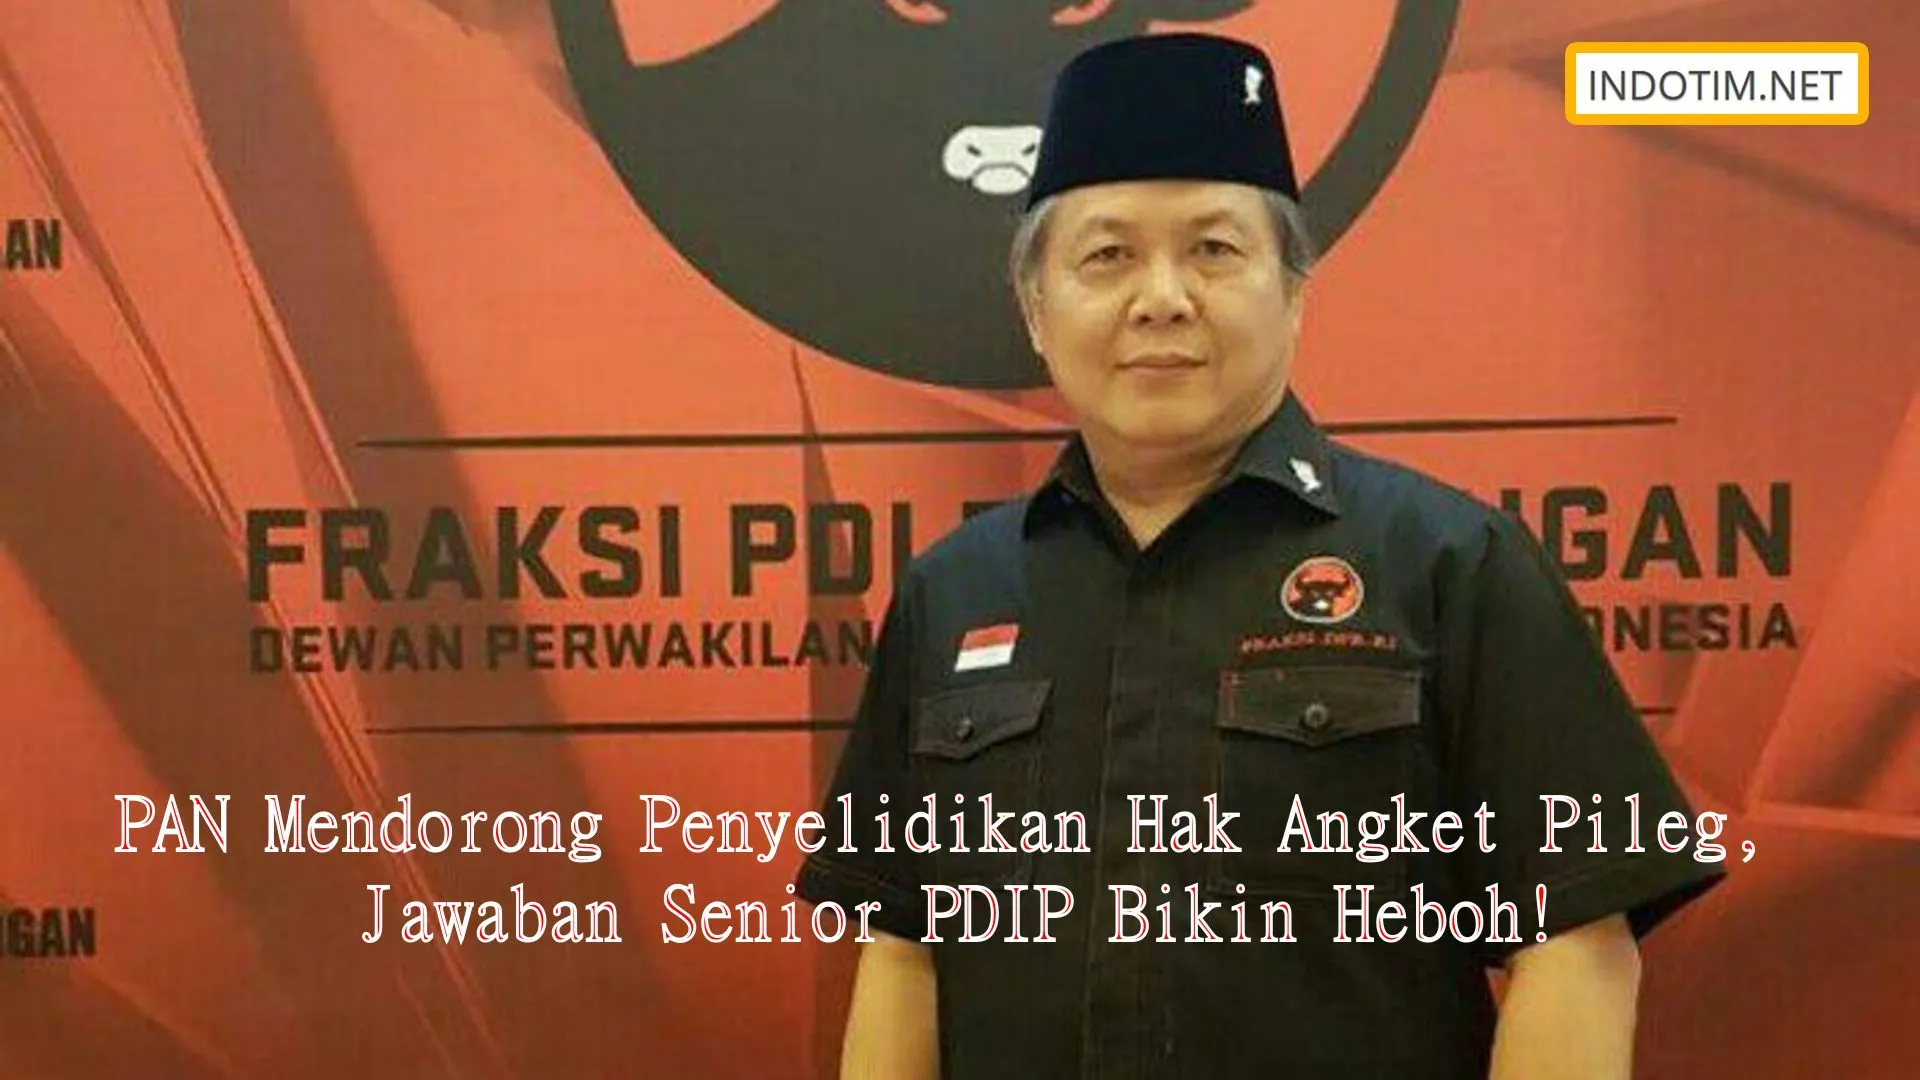 PAN Mendorong Penyelidikan Hak Angket Pileg, Jawaban Senior PDIP Bikin Heboh!